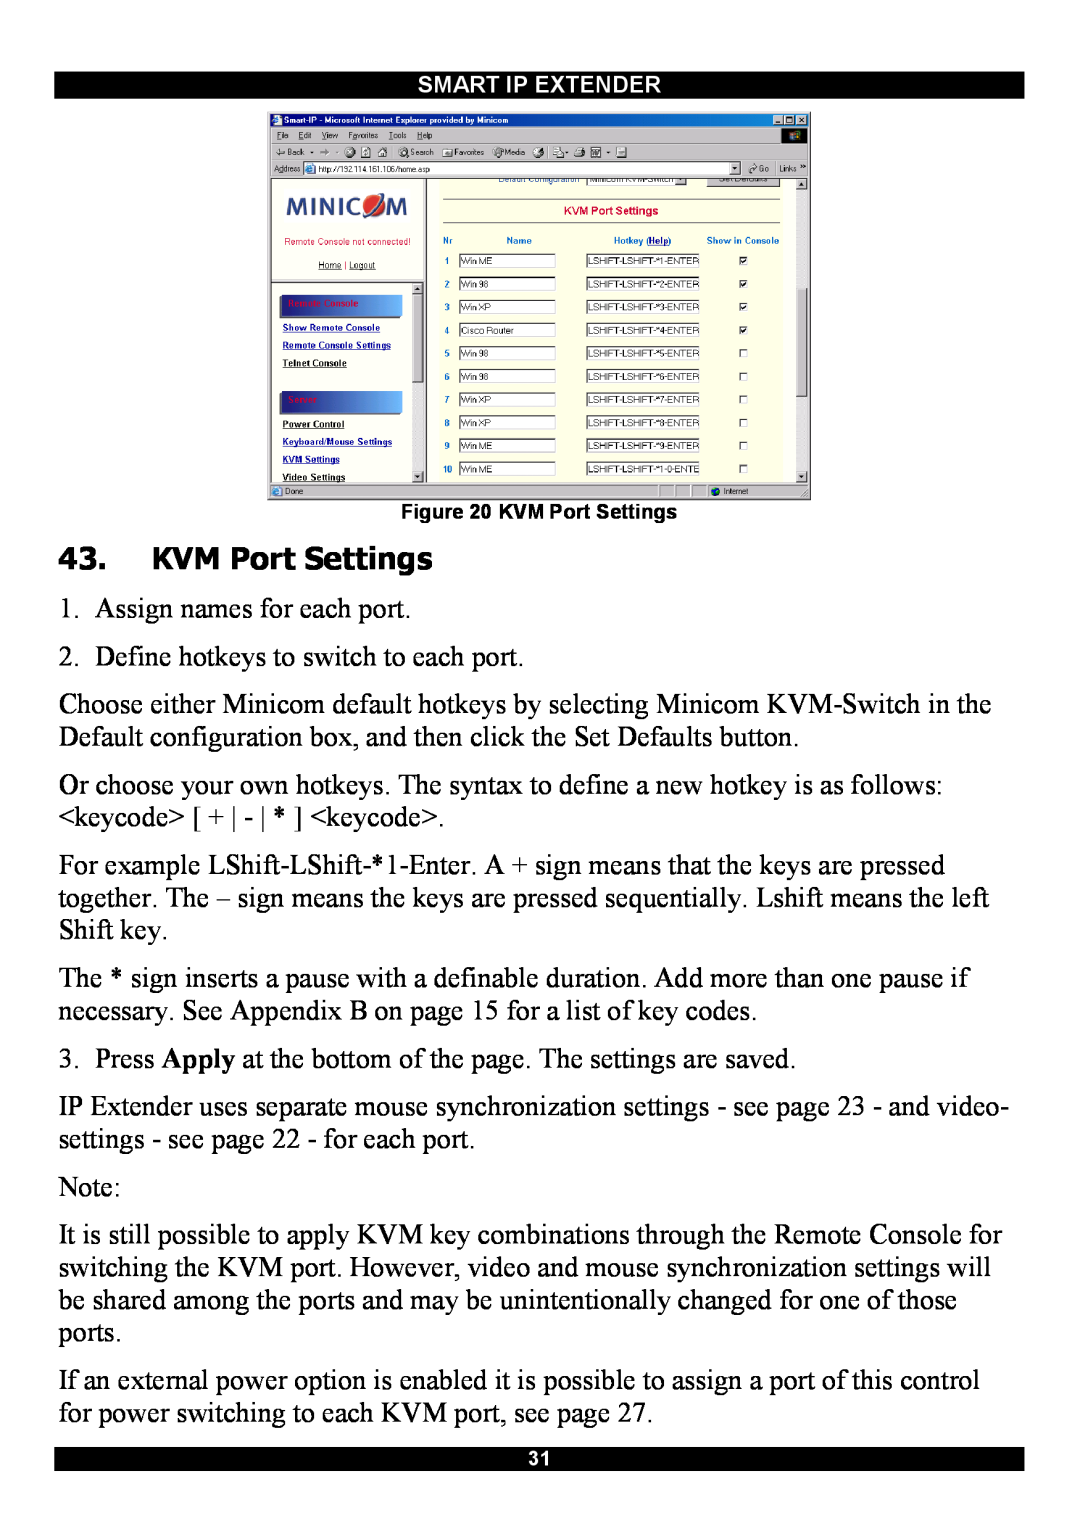 Minicom Advanced Systems Smart IP Extender manual KVM Port Settings 